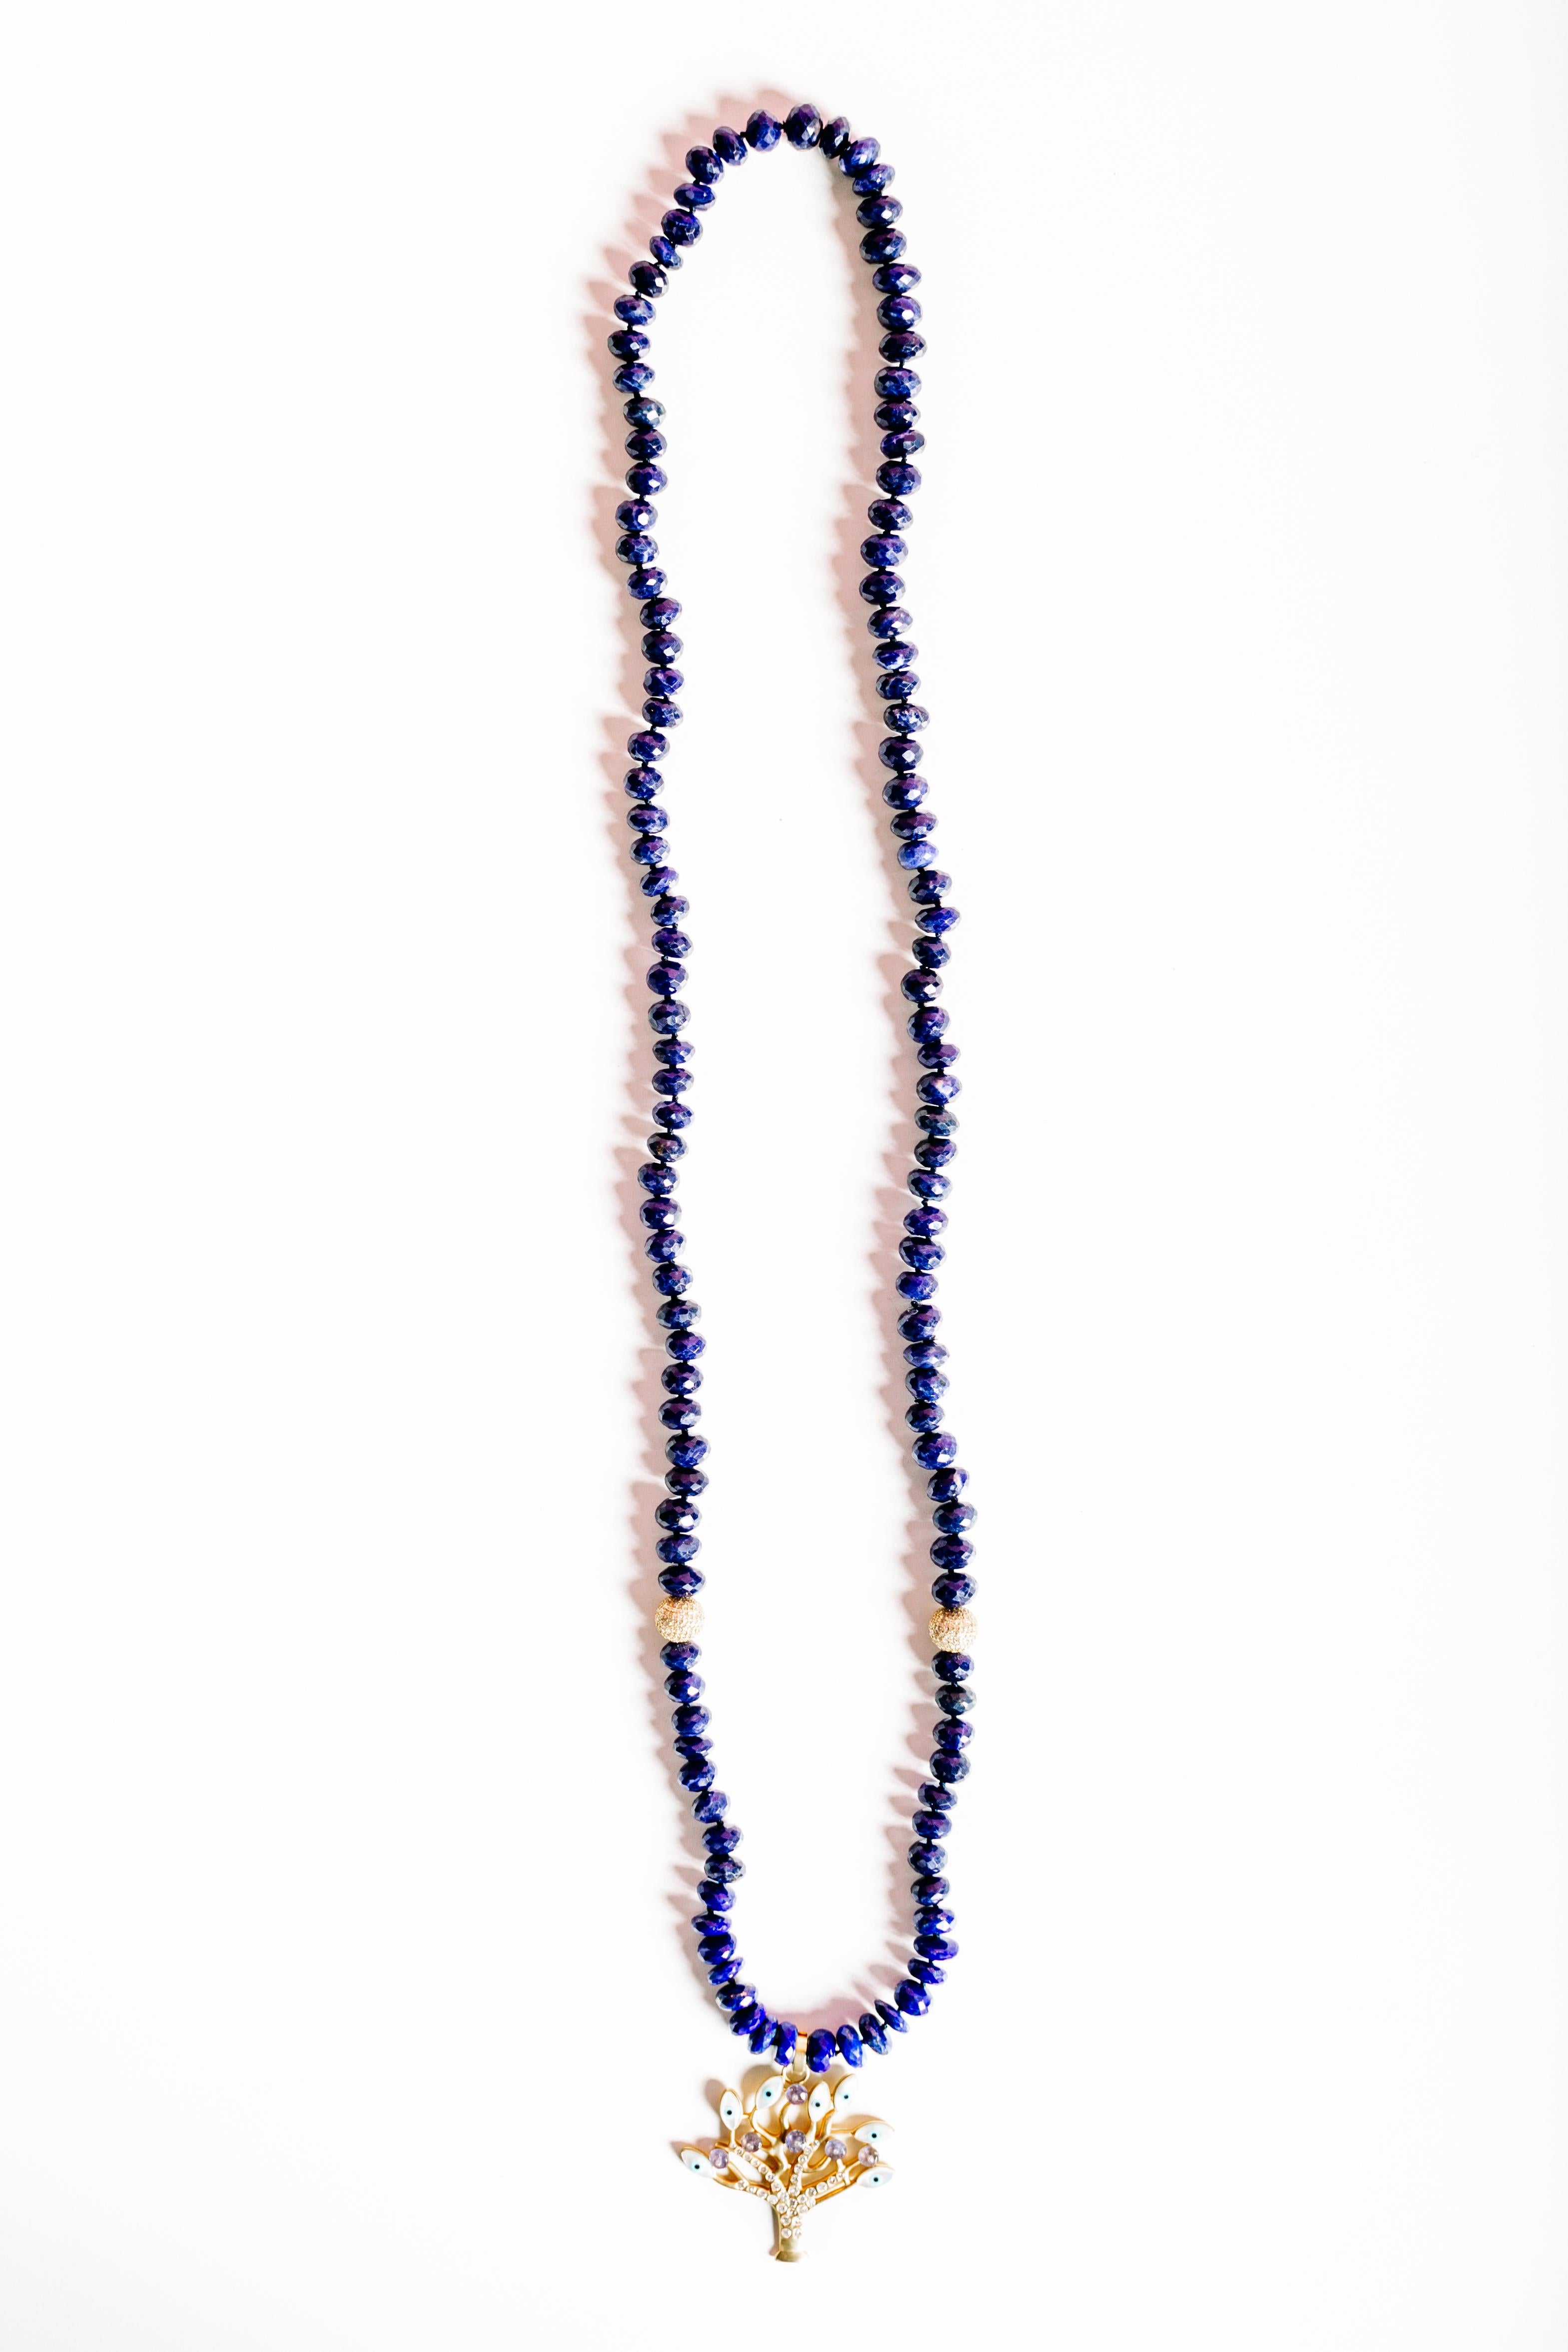 Lapis beaded necklace. 14k gold/diamond beads. 36